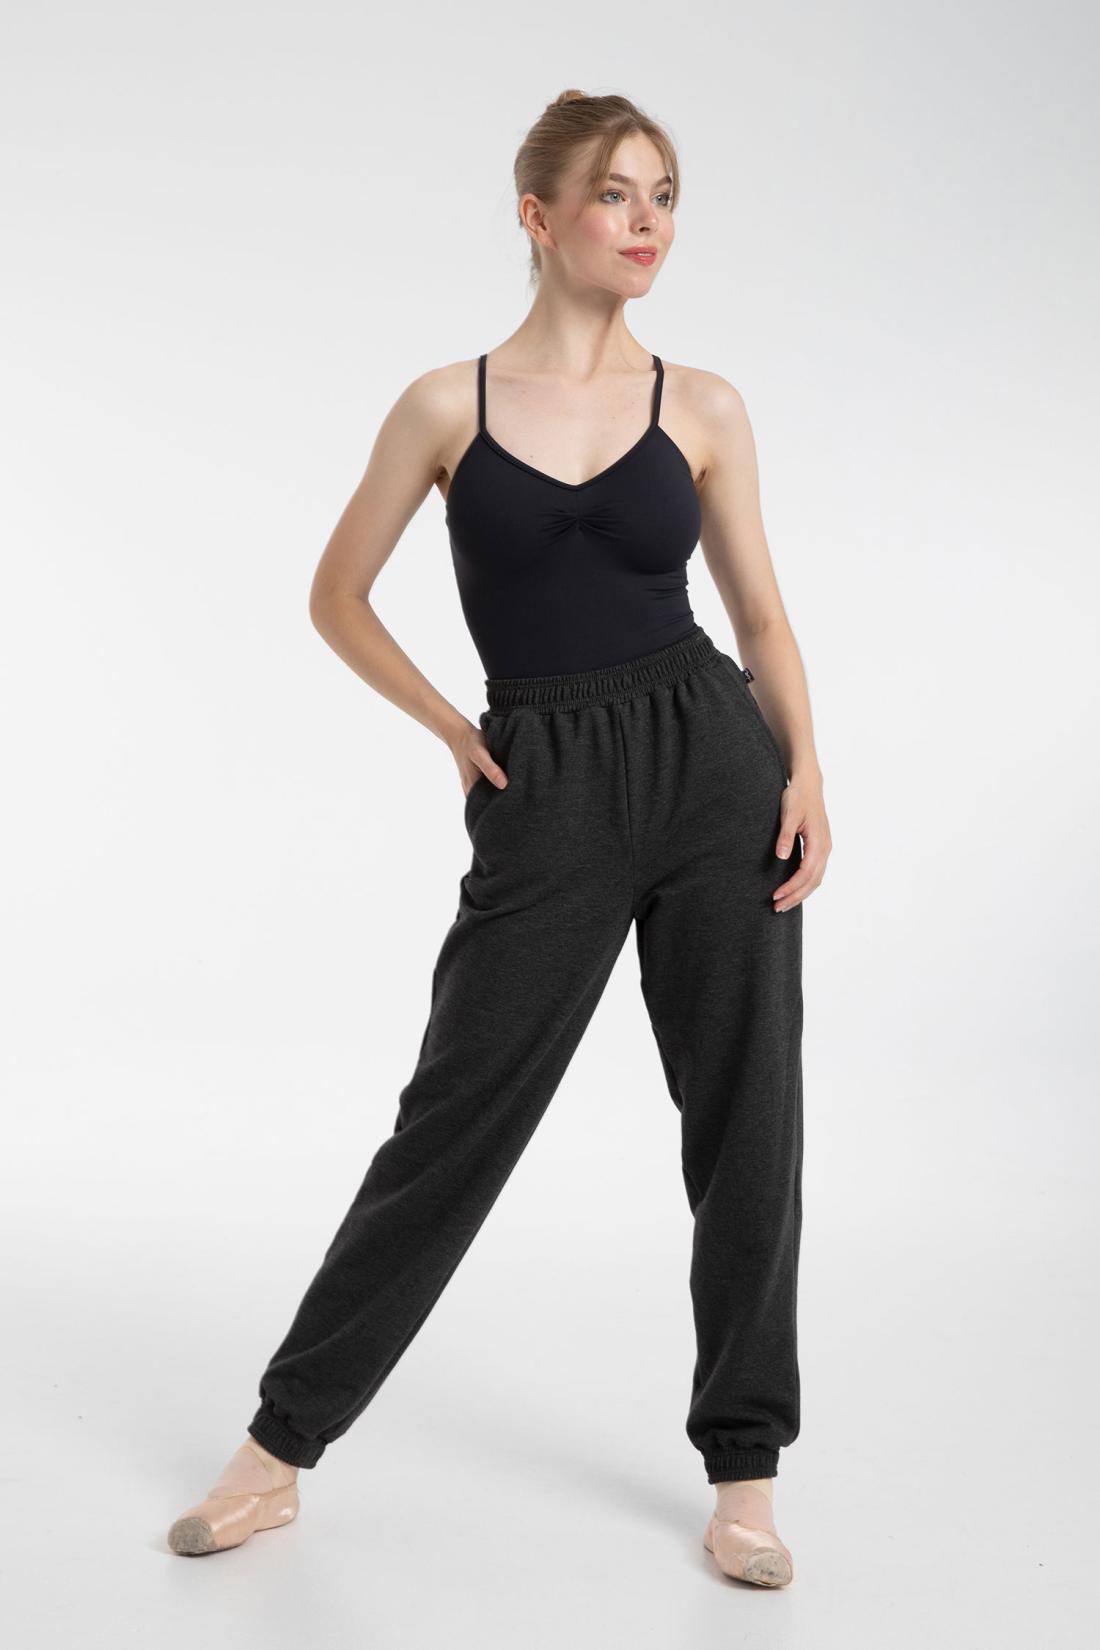 Anka Plush jogging pants fleece fabric Intermezzo dance